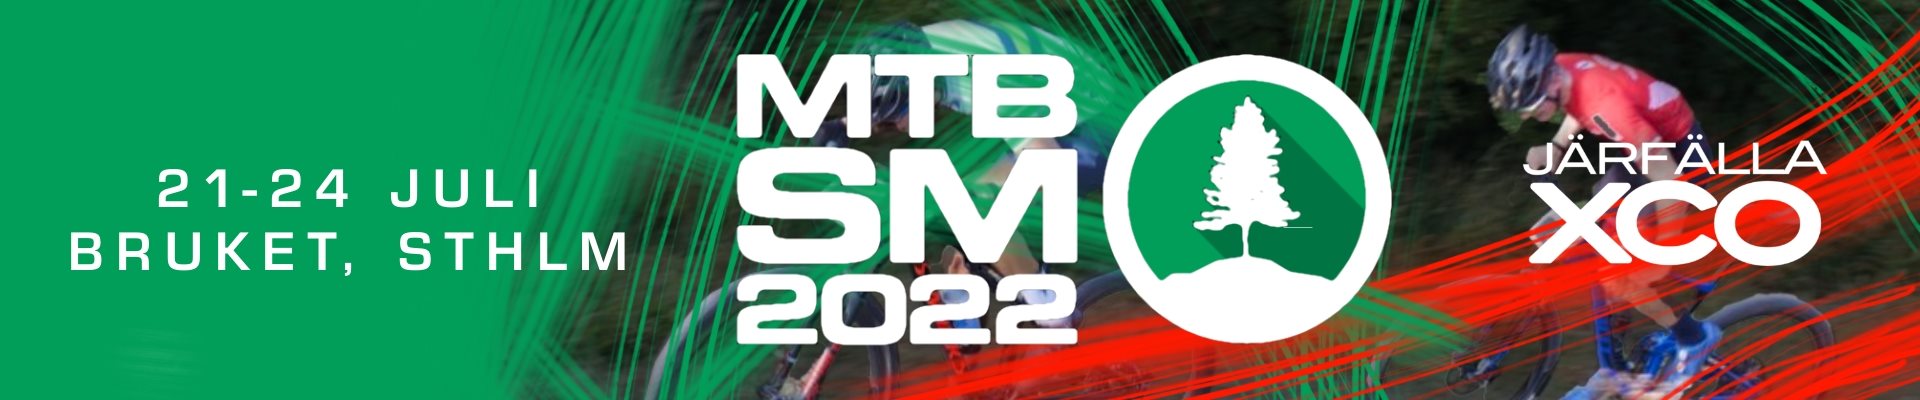 SM i MTB XCO 2022